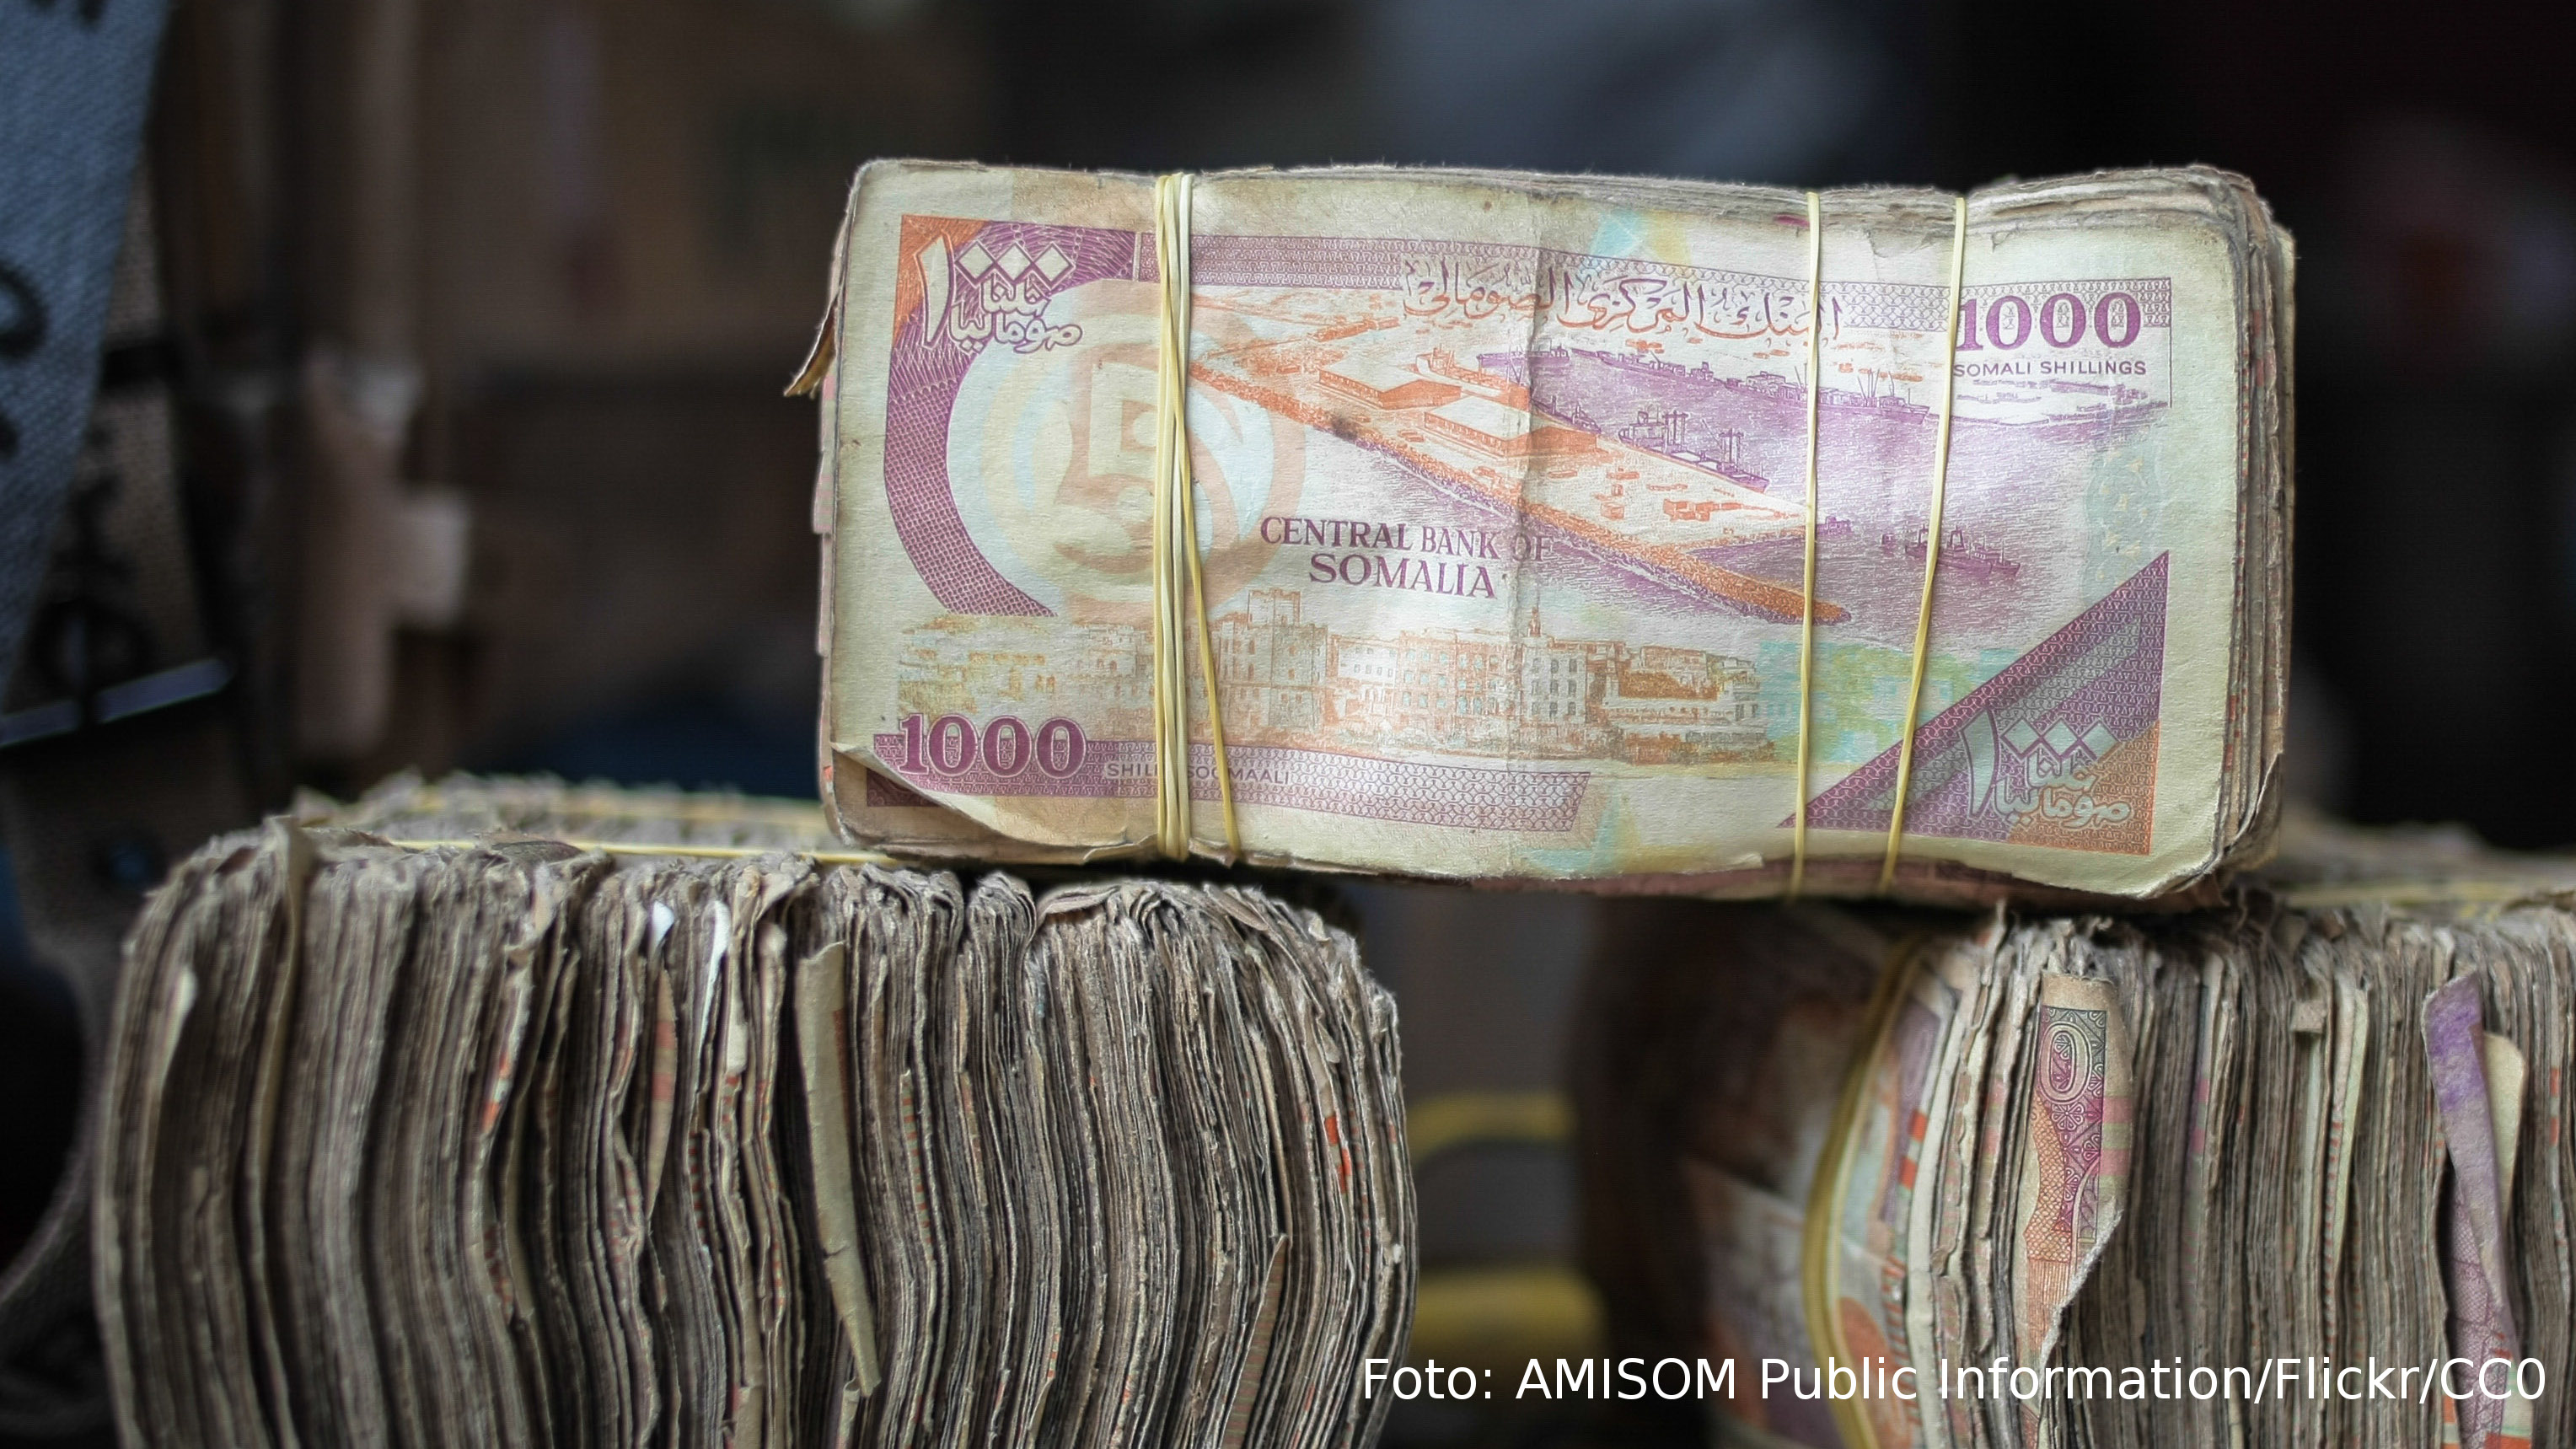 Bundles of Somali shilling notes.